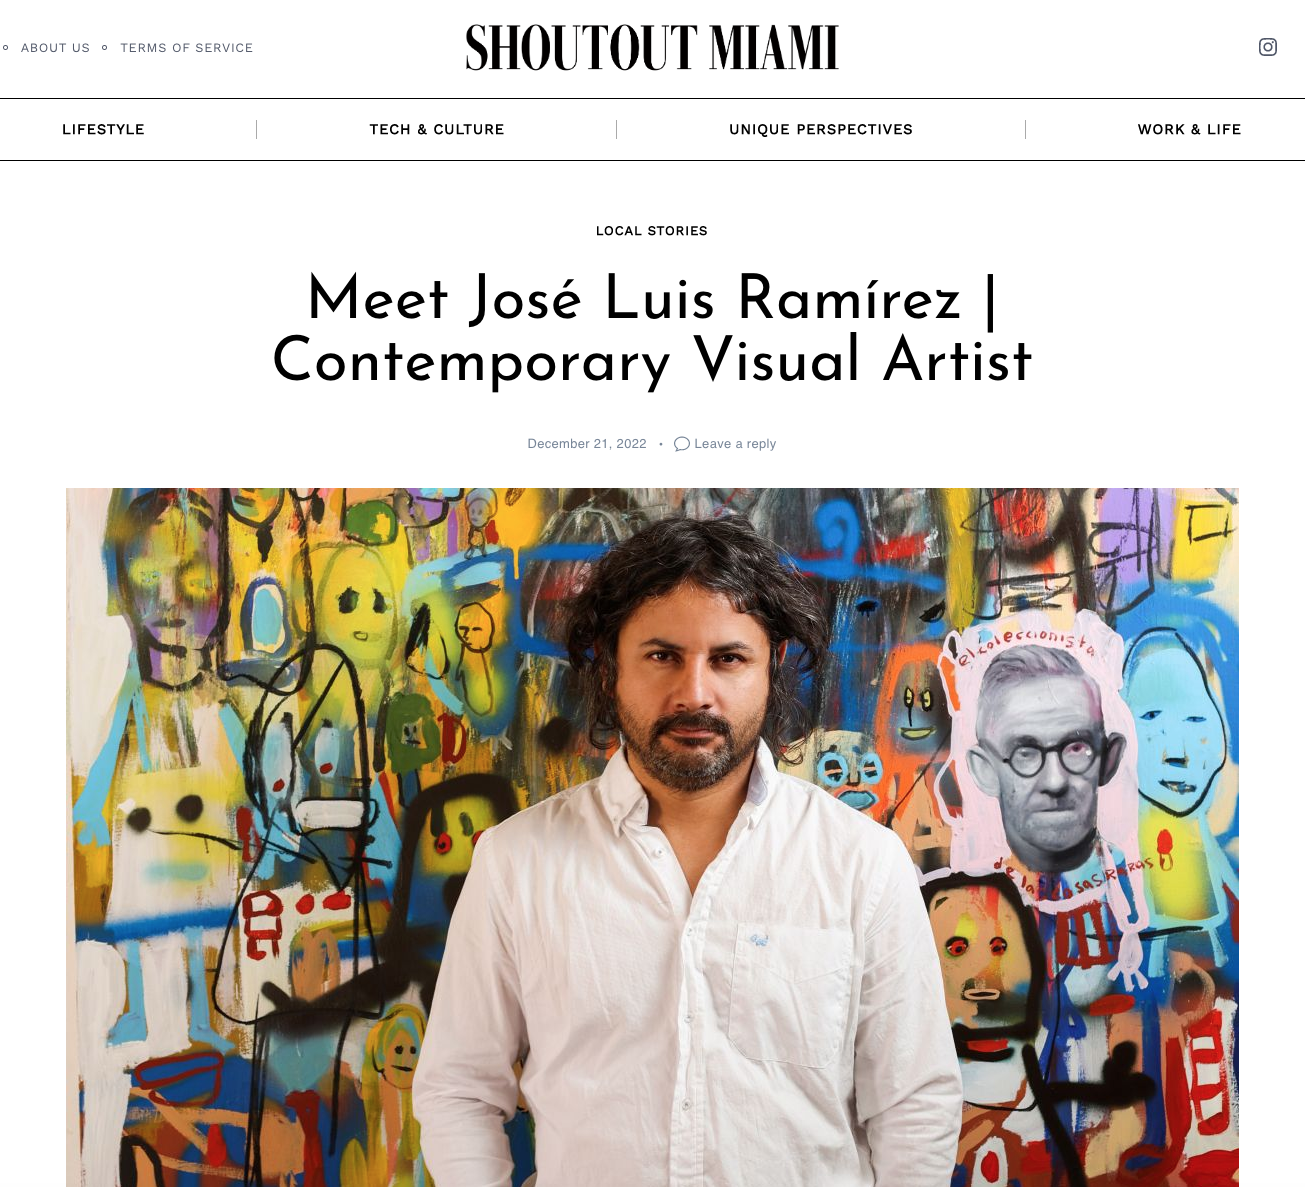 Meet José Luis Ramírez: Contemporary Visual Artist